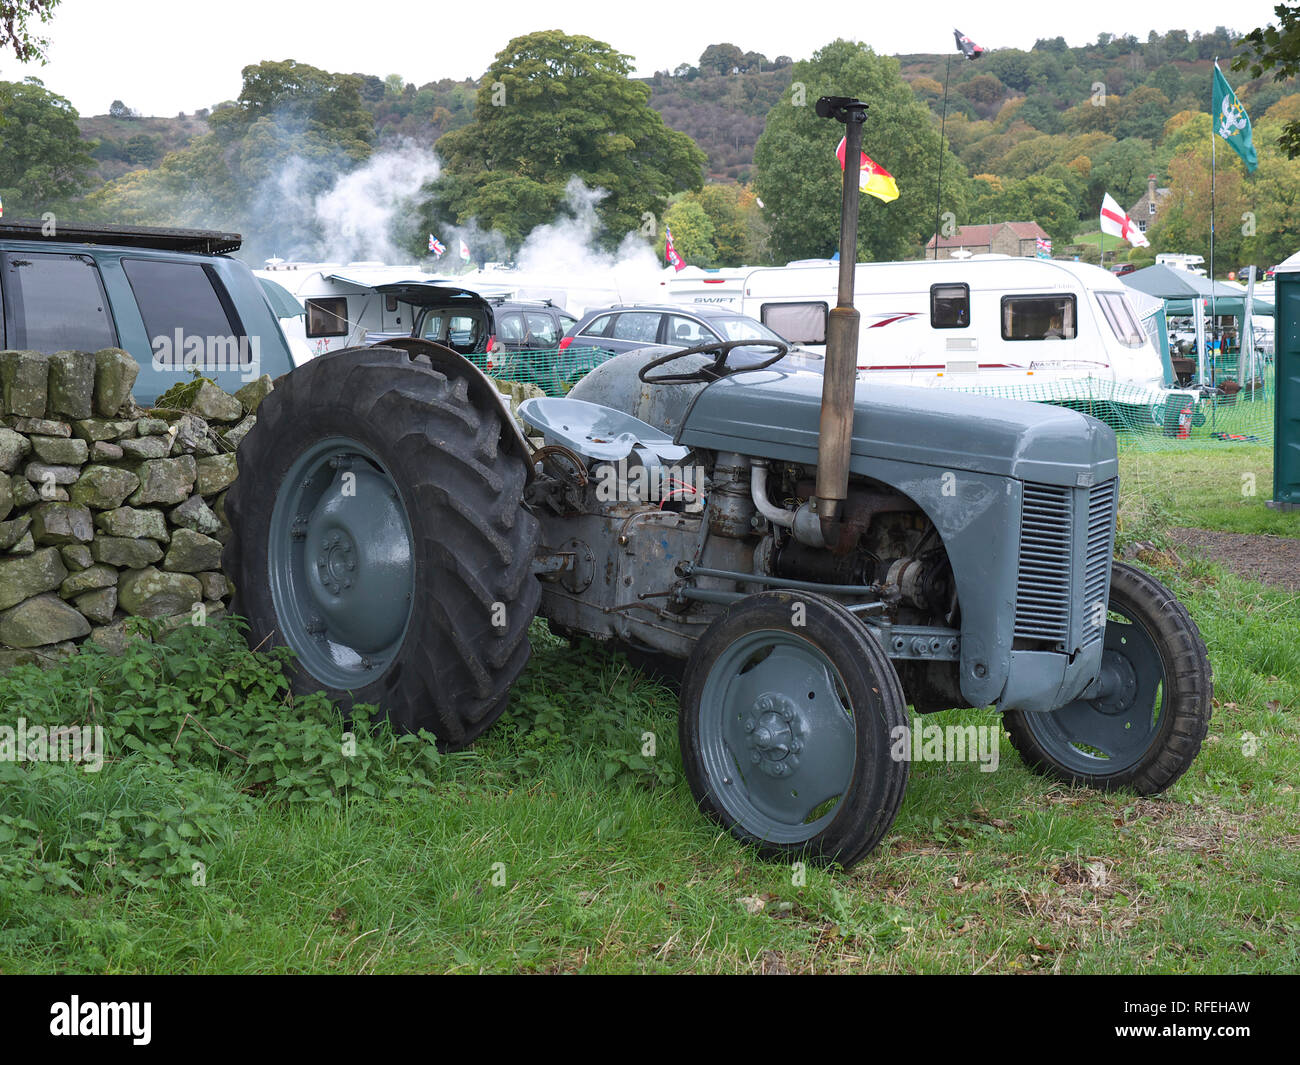 https://c8.alamy.com/compde/rfehaw/vintage-ferguson-traktor-bei-ashover-festival-der-lichter-rfehaw.jpg